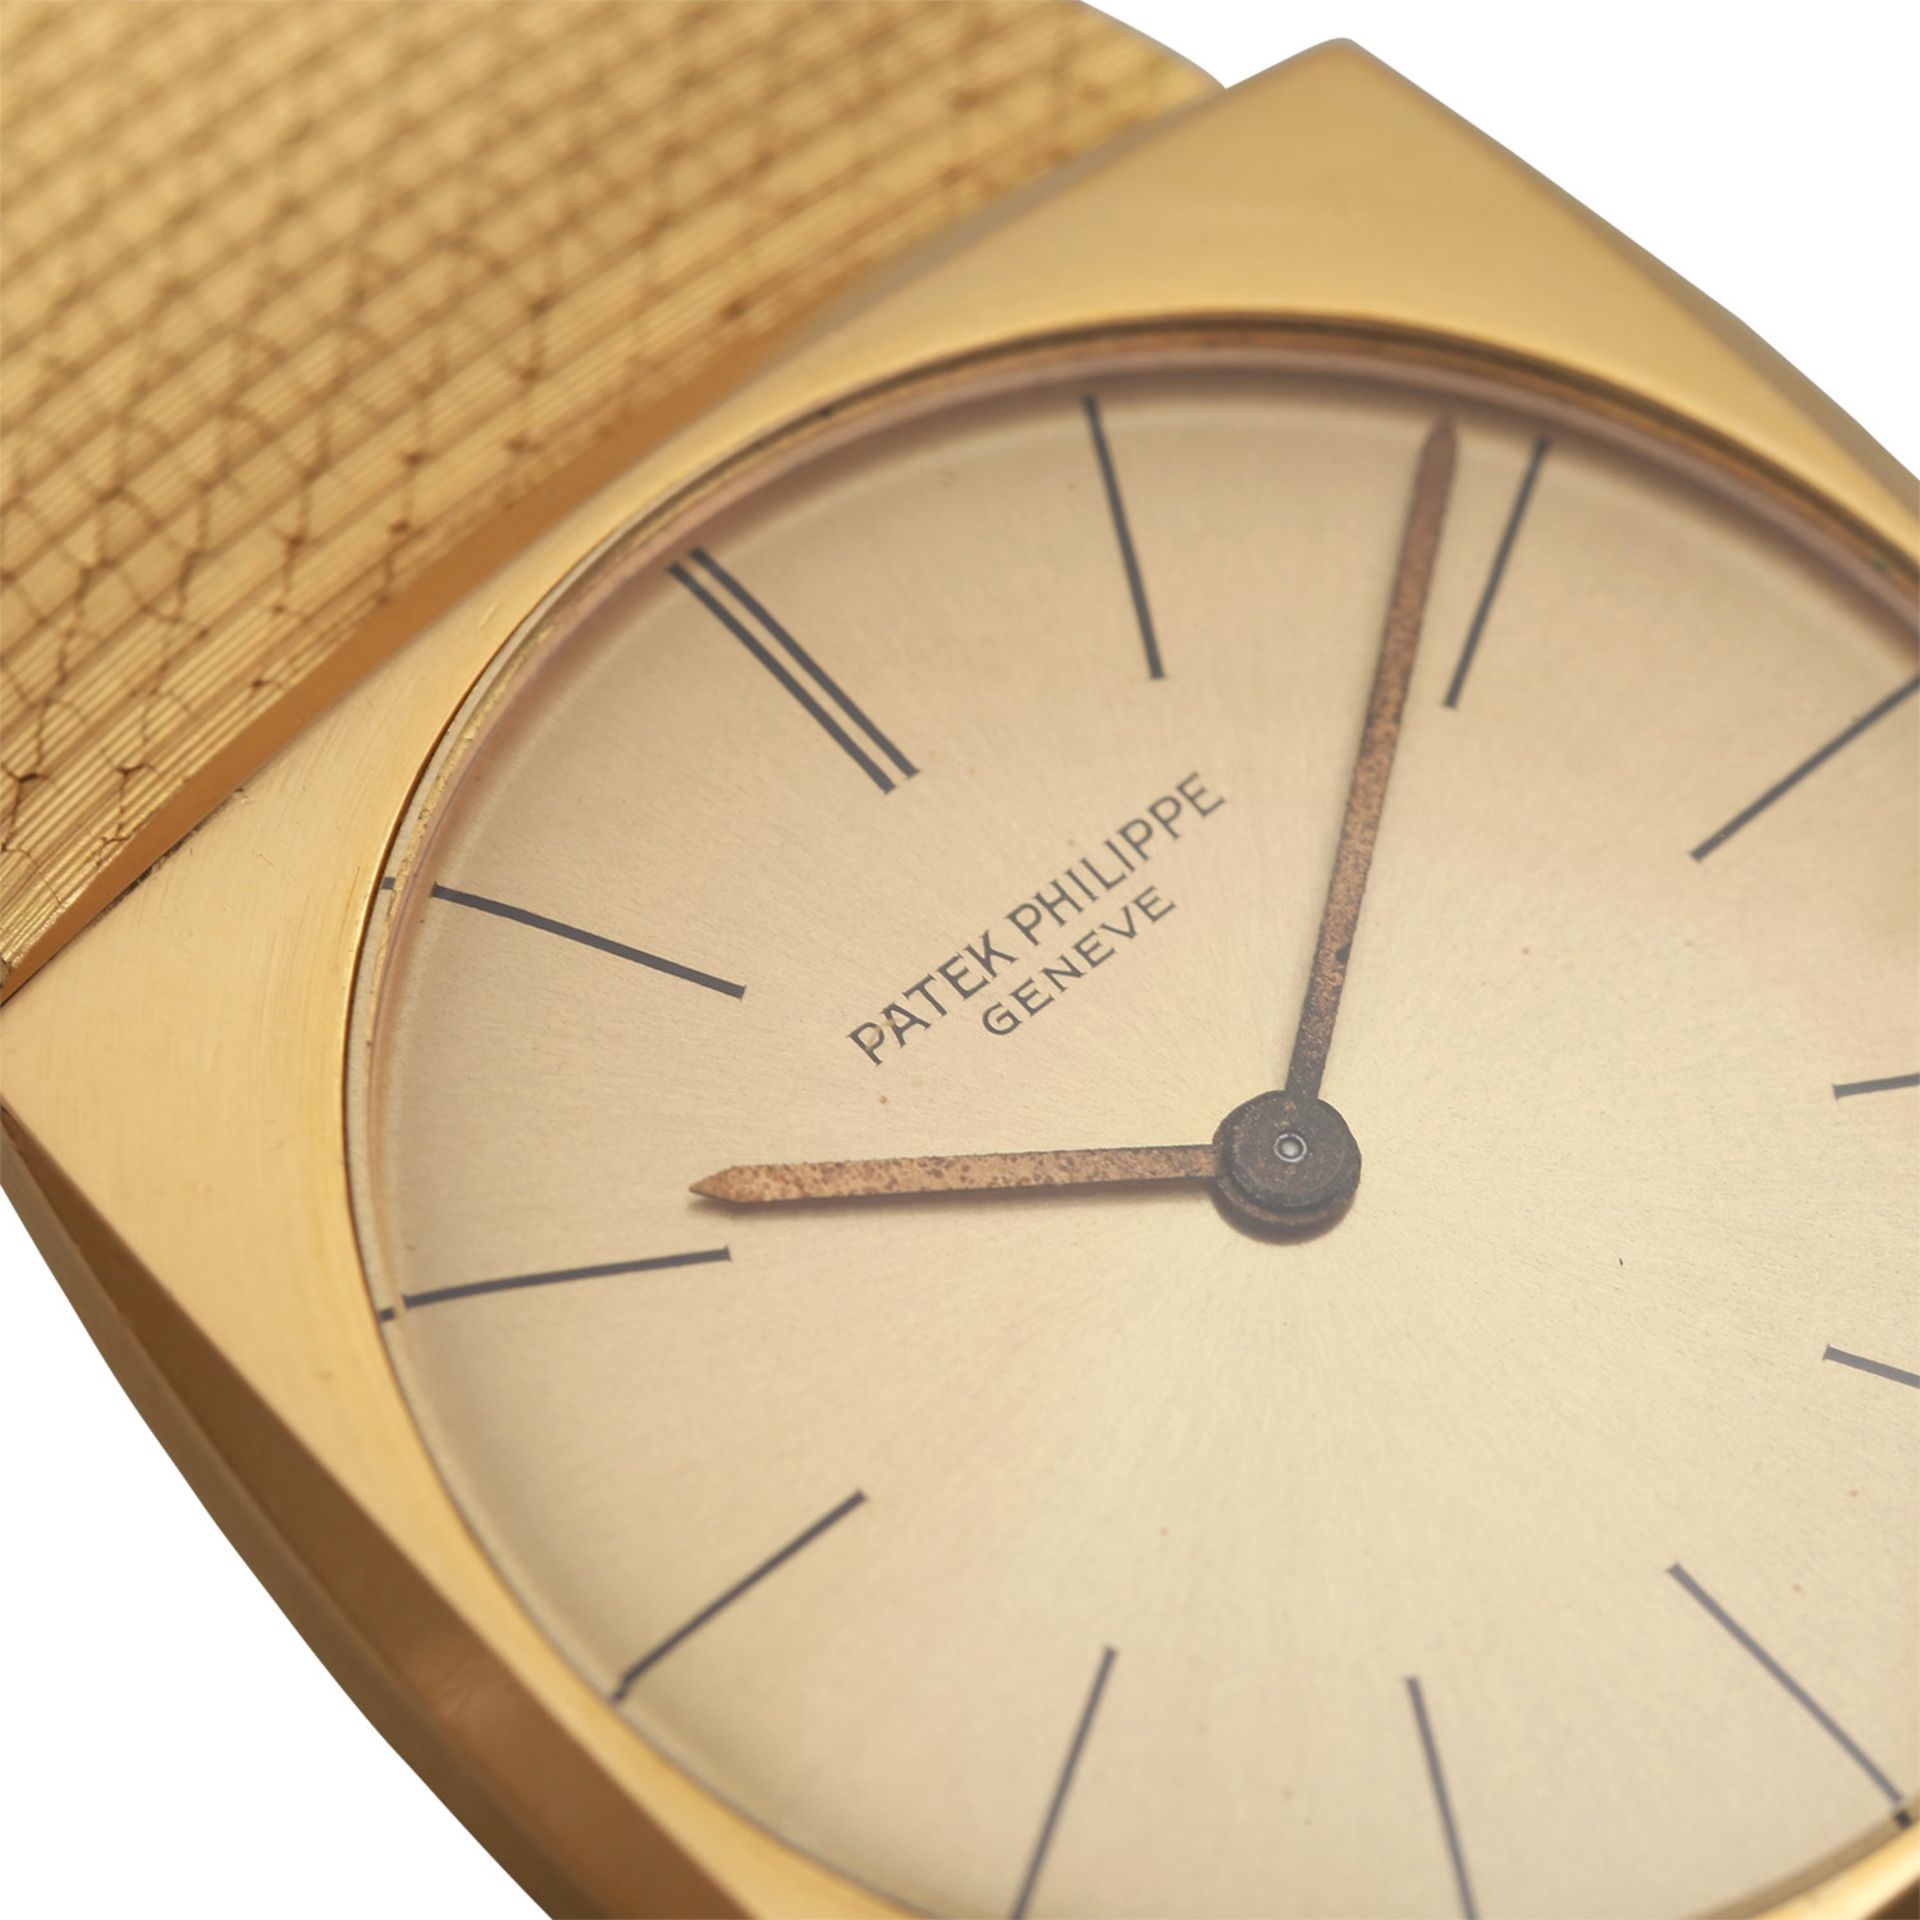 PATEK PHILIPPE Vintage Armbanduhr, Ref. 3523/1, ca. 1960er Jahre.Gold 18K. Handaufzugwerk, Cal. 175. - Bild 6 aus 9